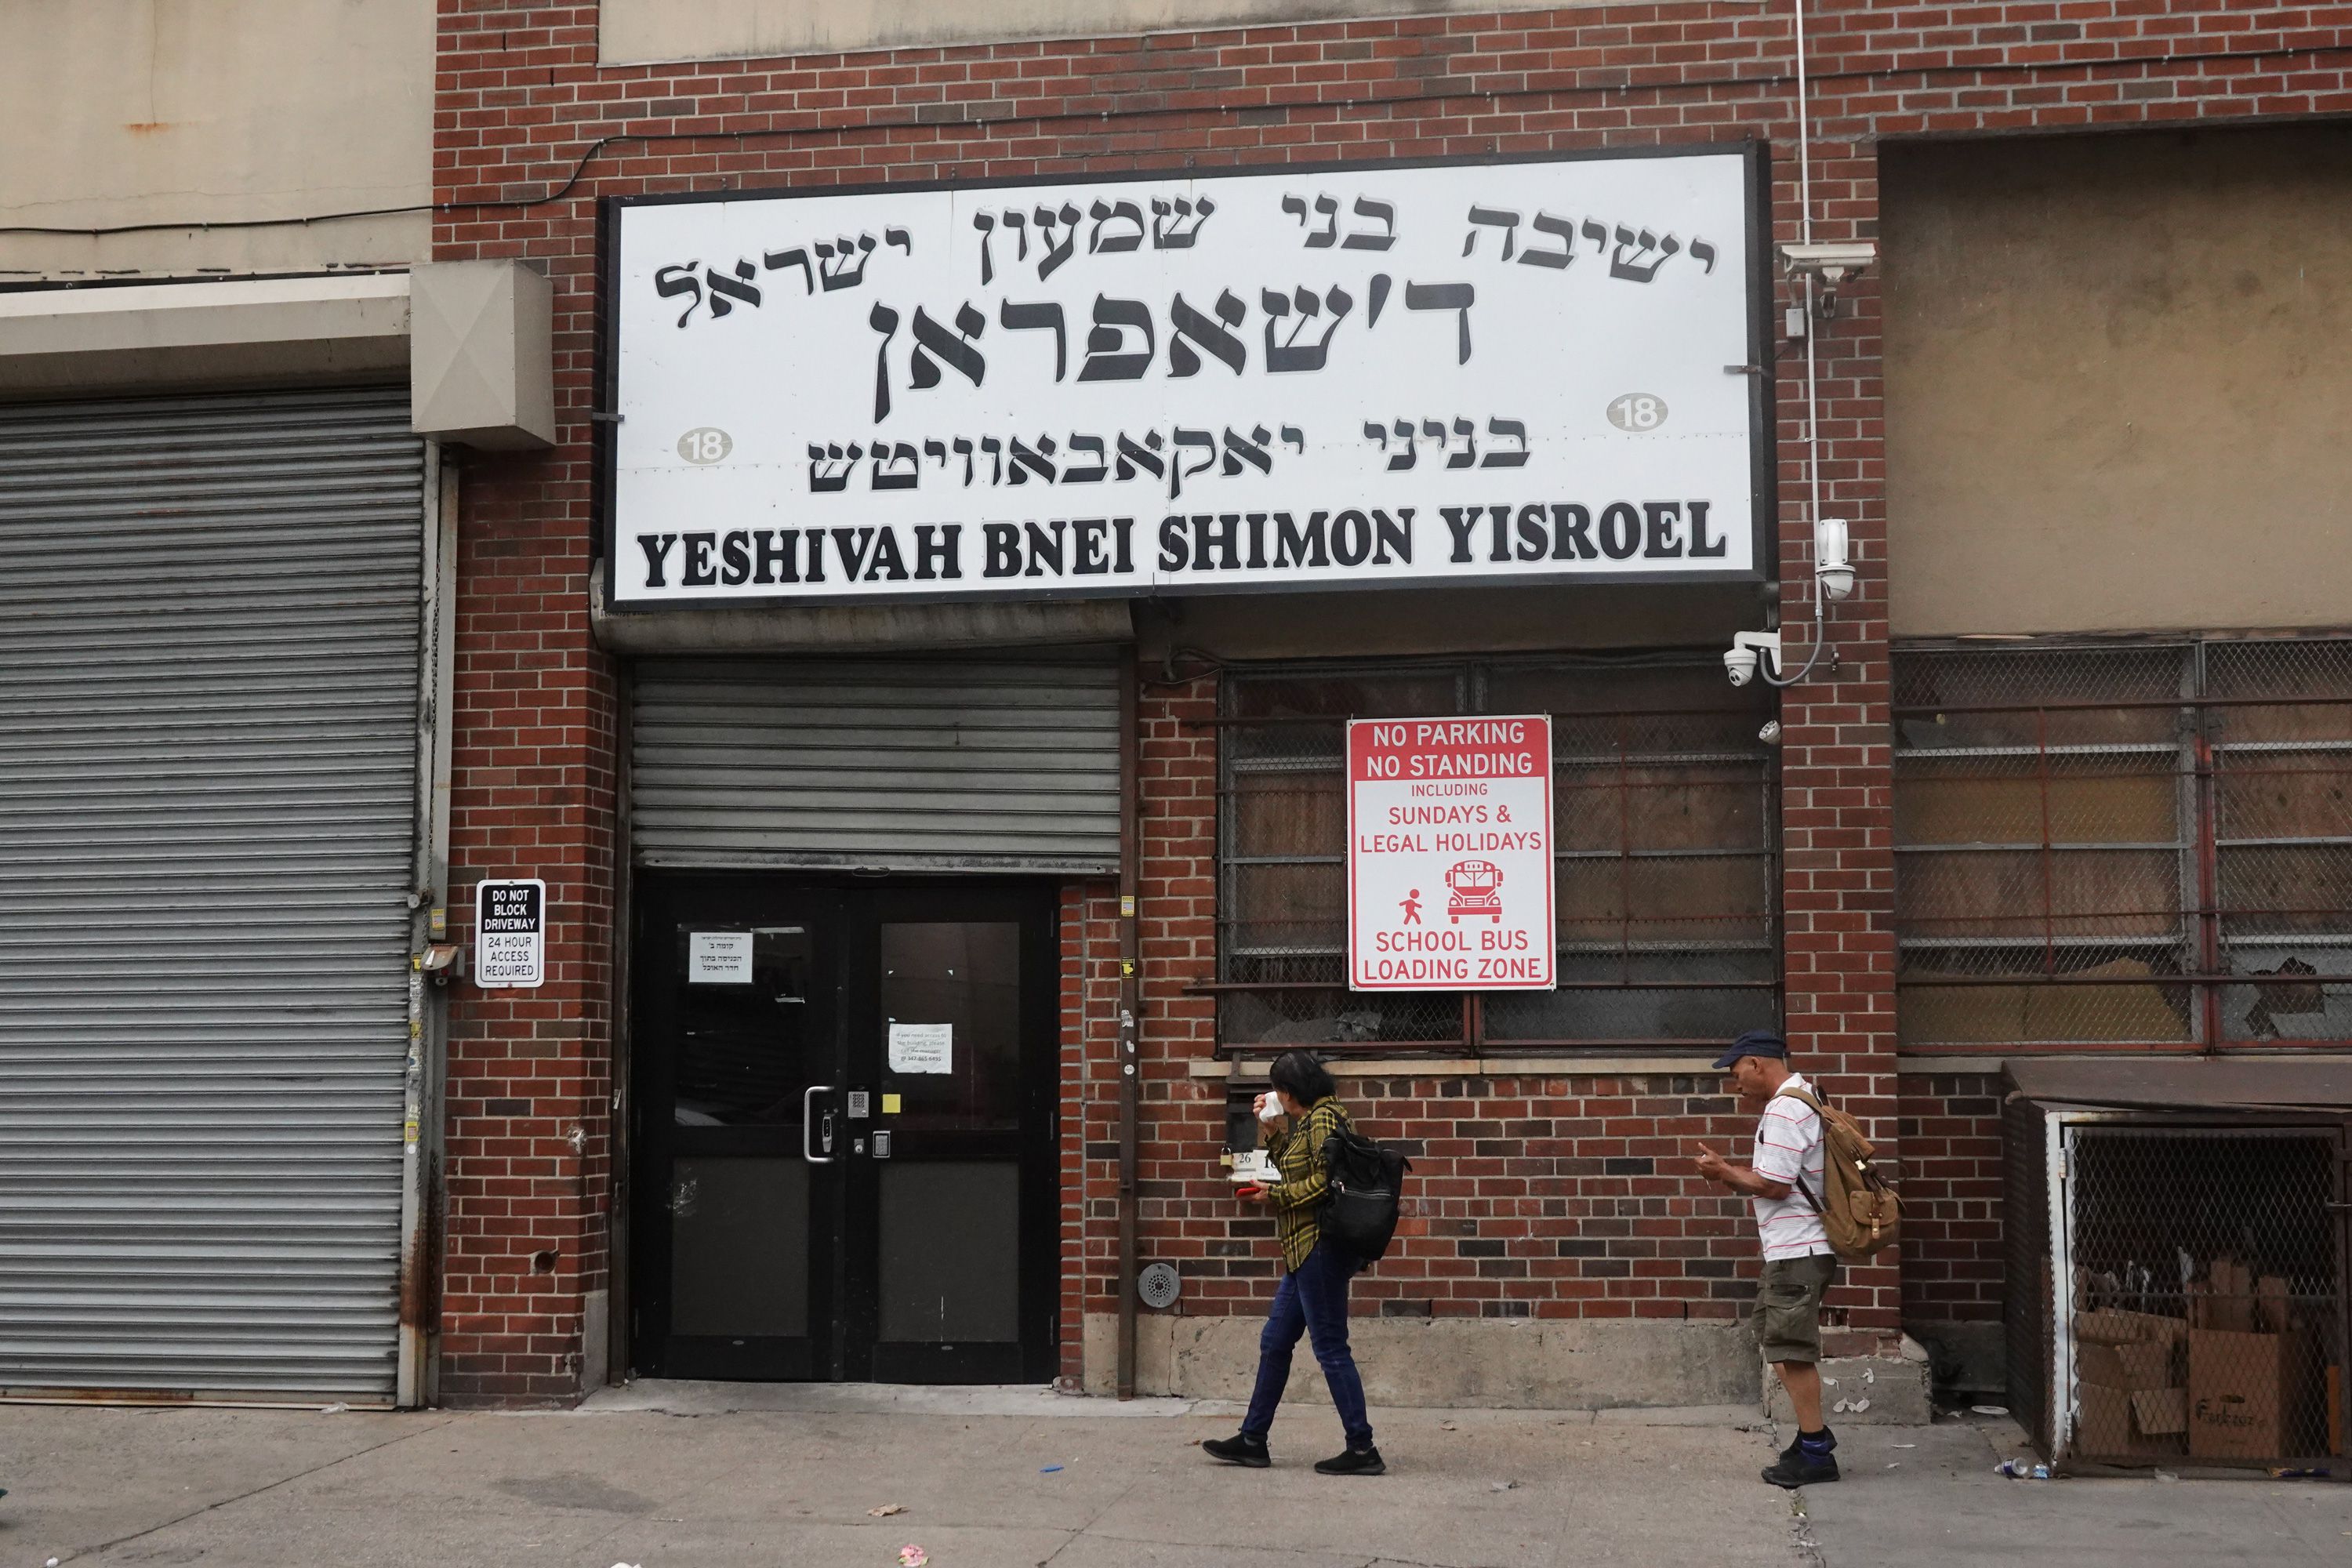 Pedestrians walk by a Williamsburg industrial building housing Yeshiva Bnei Shimon Yisroel.